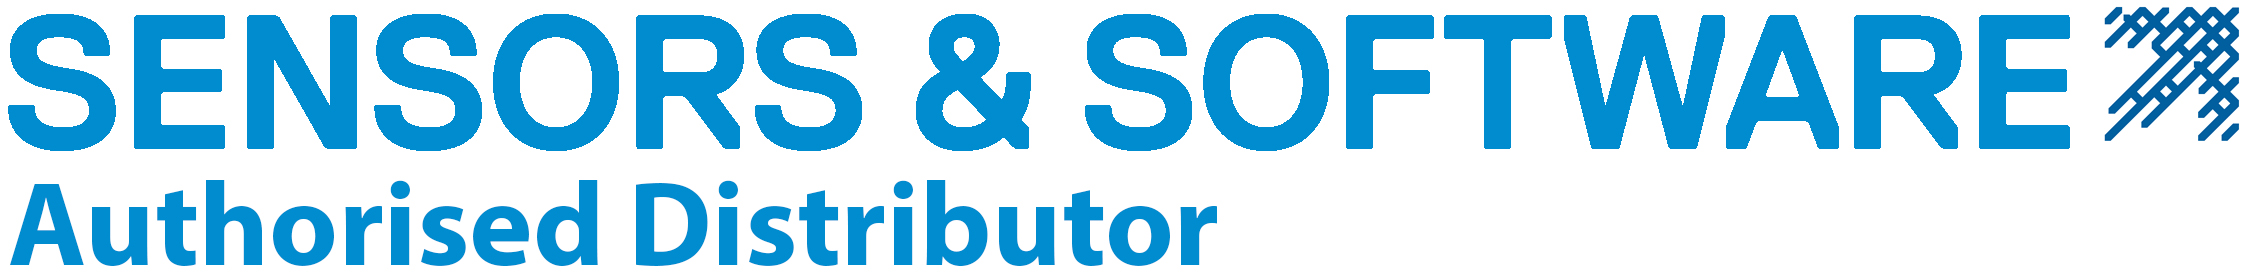 Sensors & Software logo